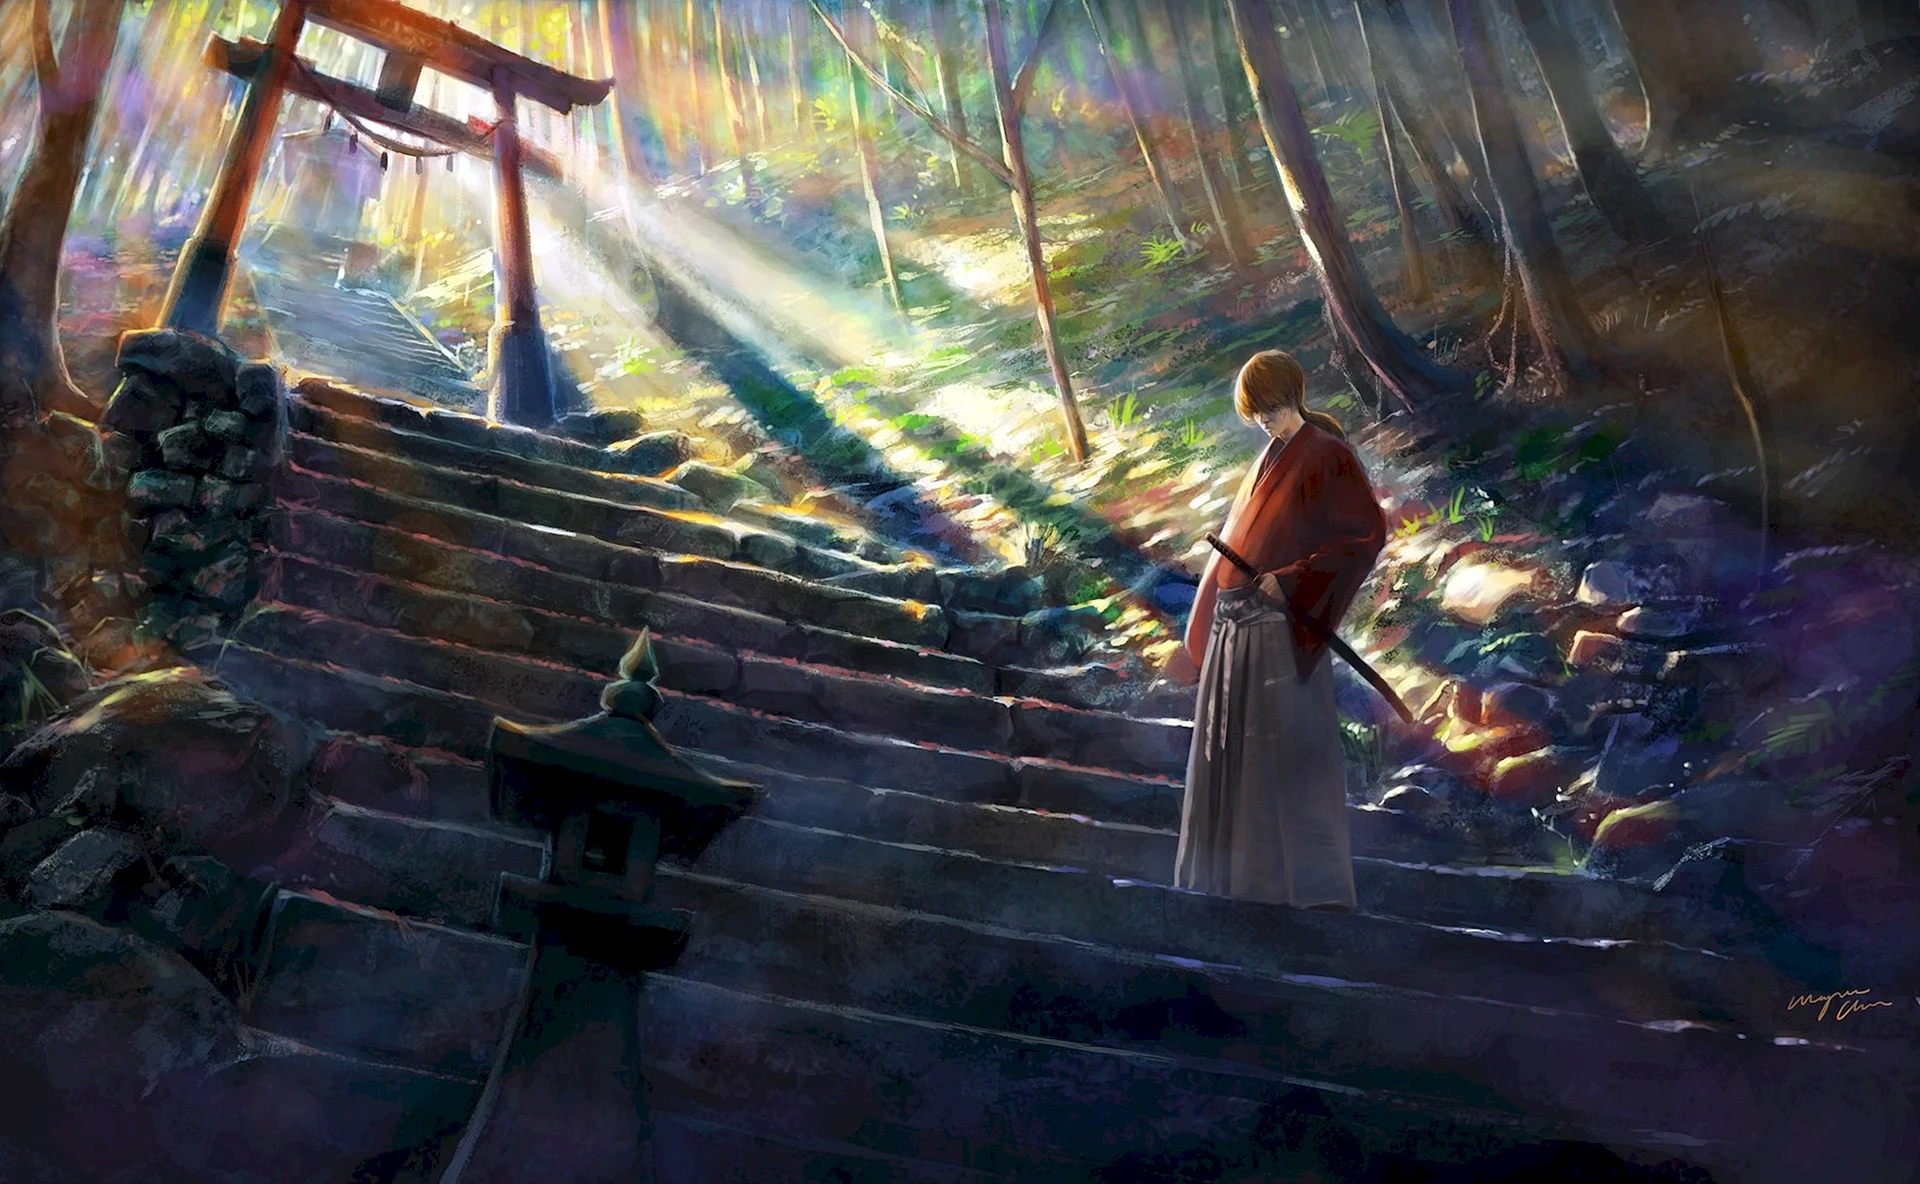 Kenshin Himura Wallpaper